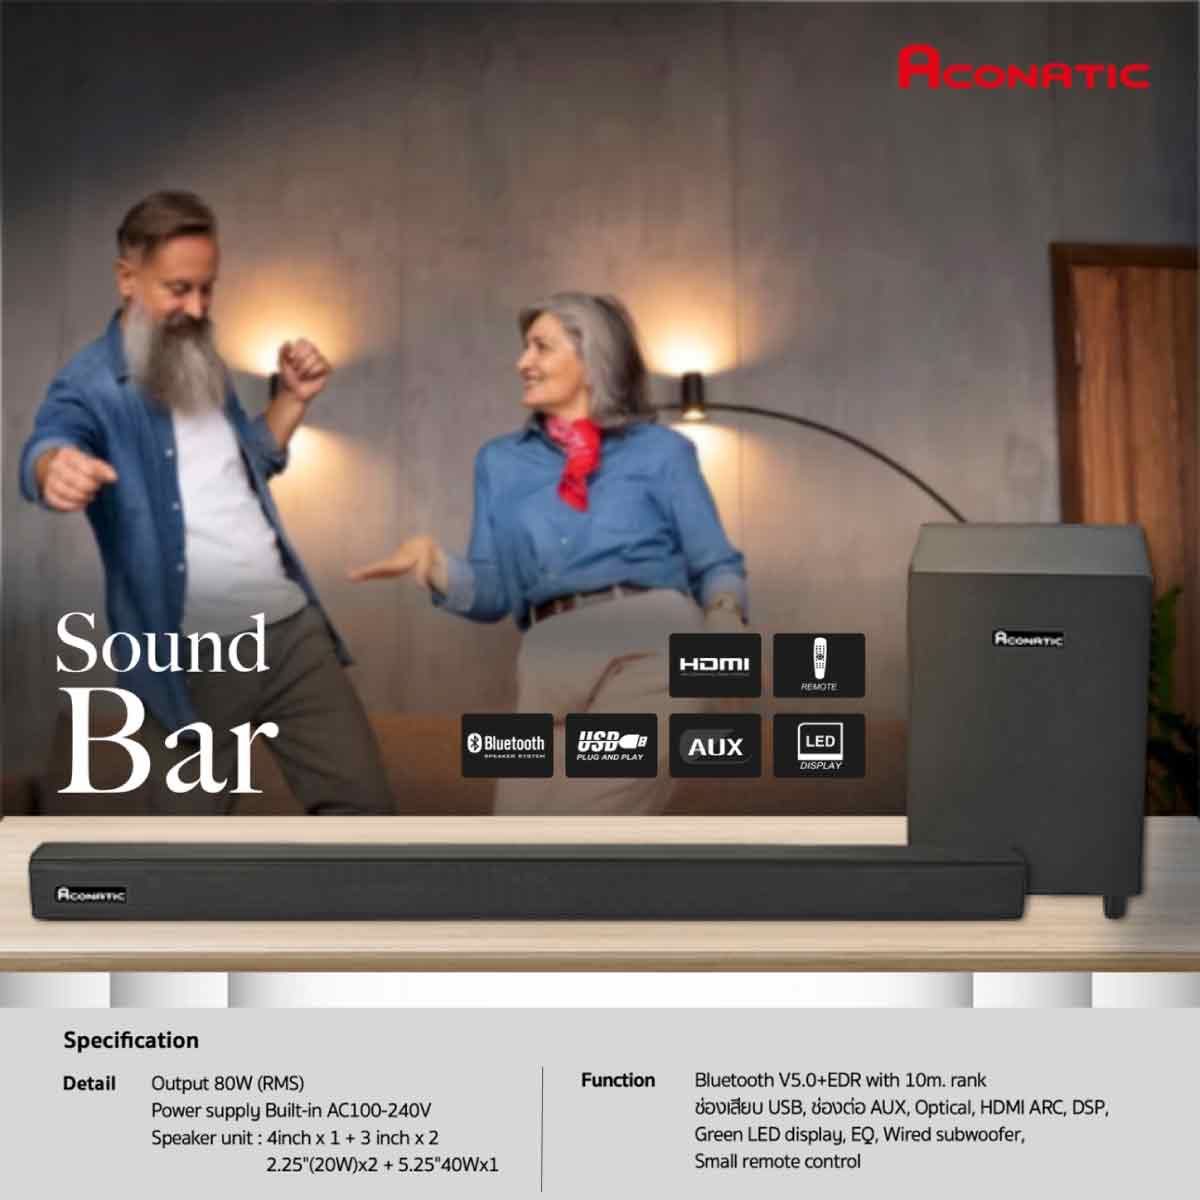 ACONATIC Sound Bar 2.1CH พลังเสียง 80W ซาวน์บาร์ BLUETOOTH  รุ่น SP160